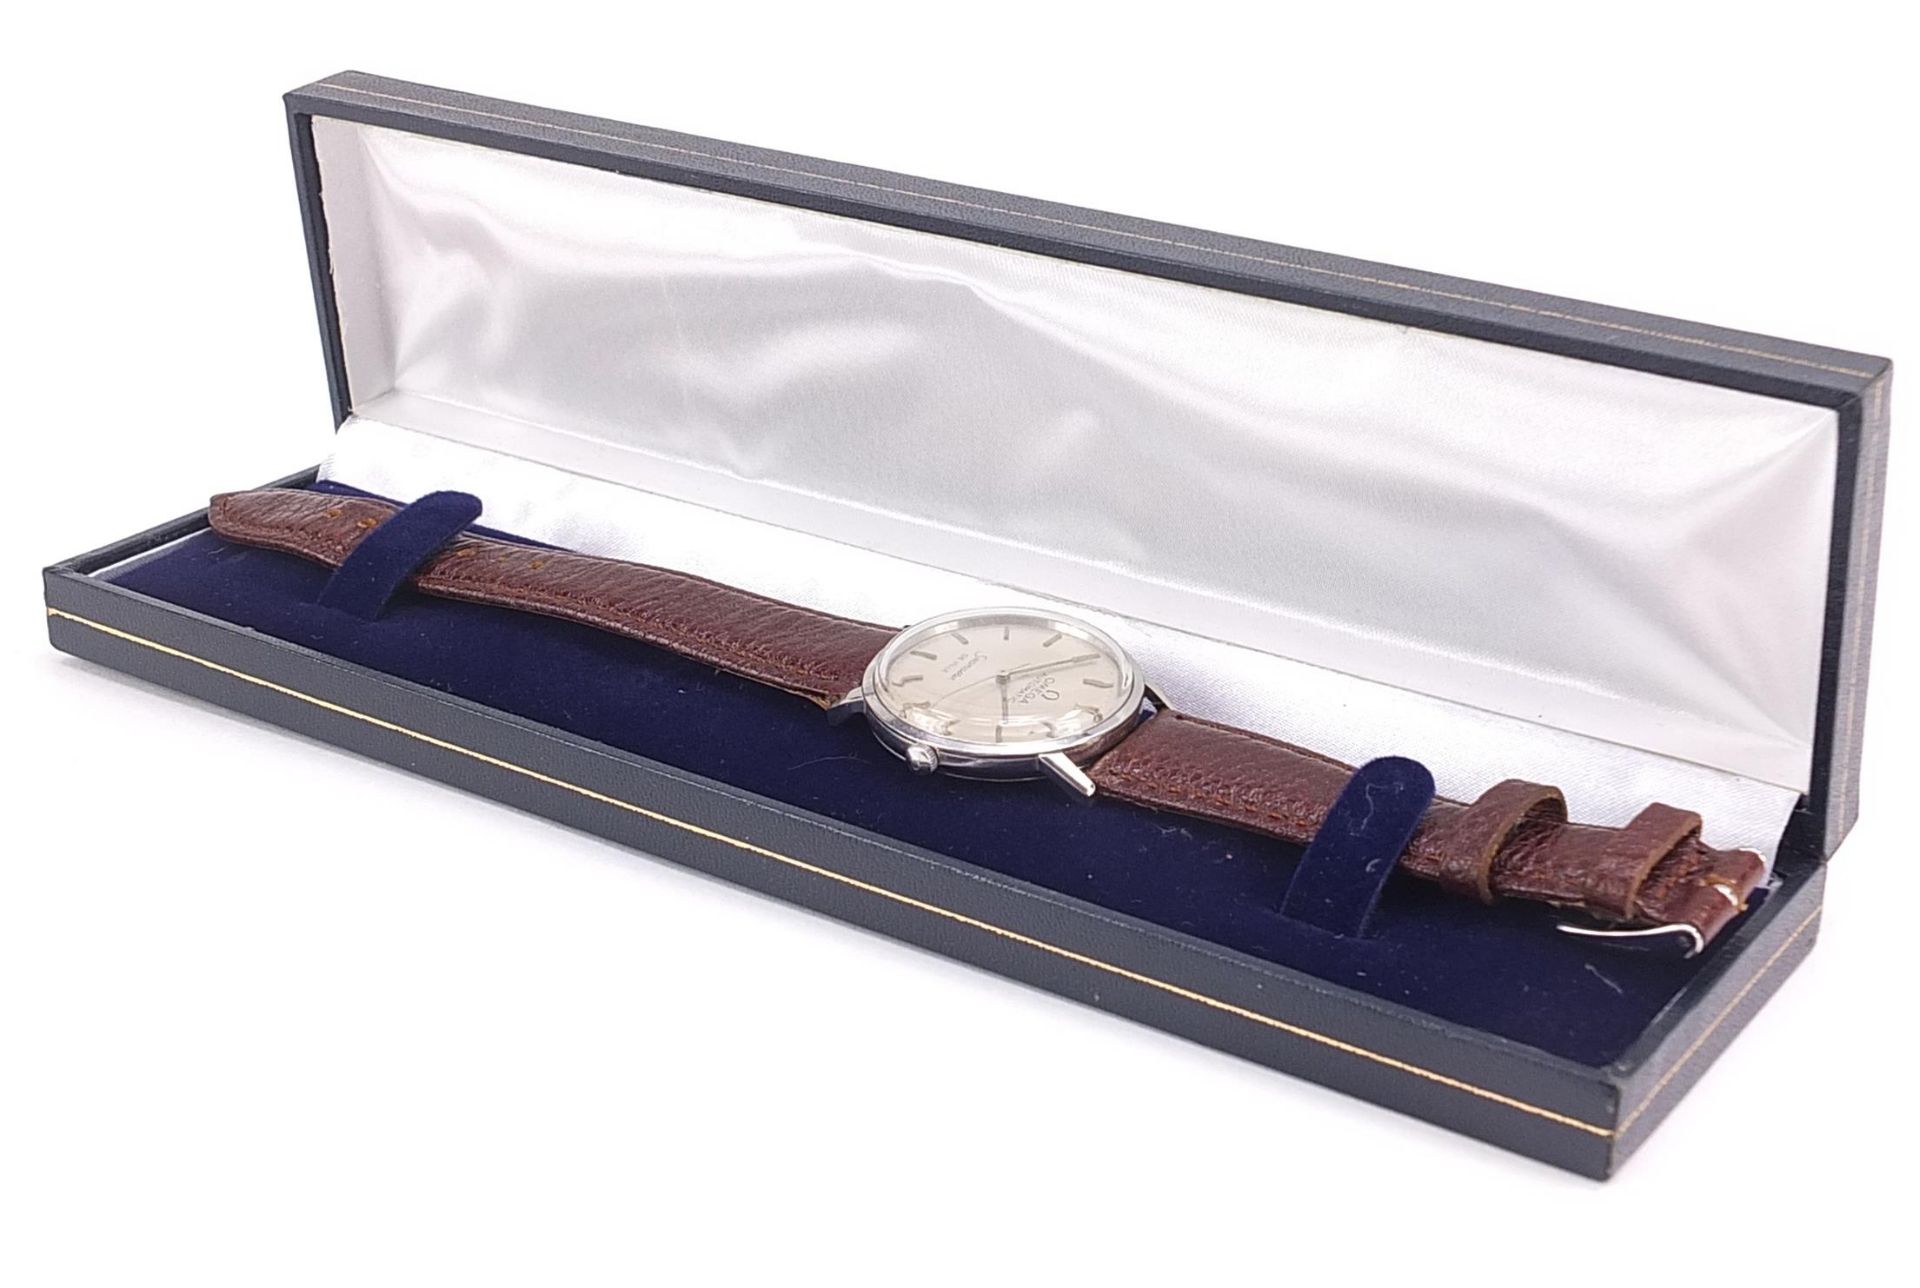 Omega, vintage gentlemen's Omega Deville Seamaster automatic wristwatch, 33mm in diameter - Image 5 of 6